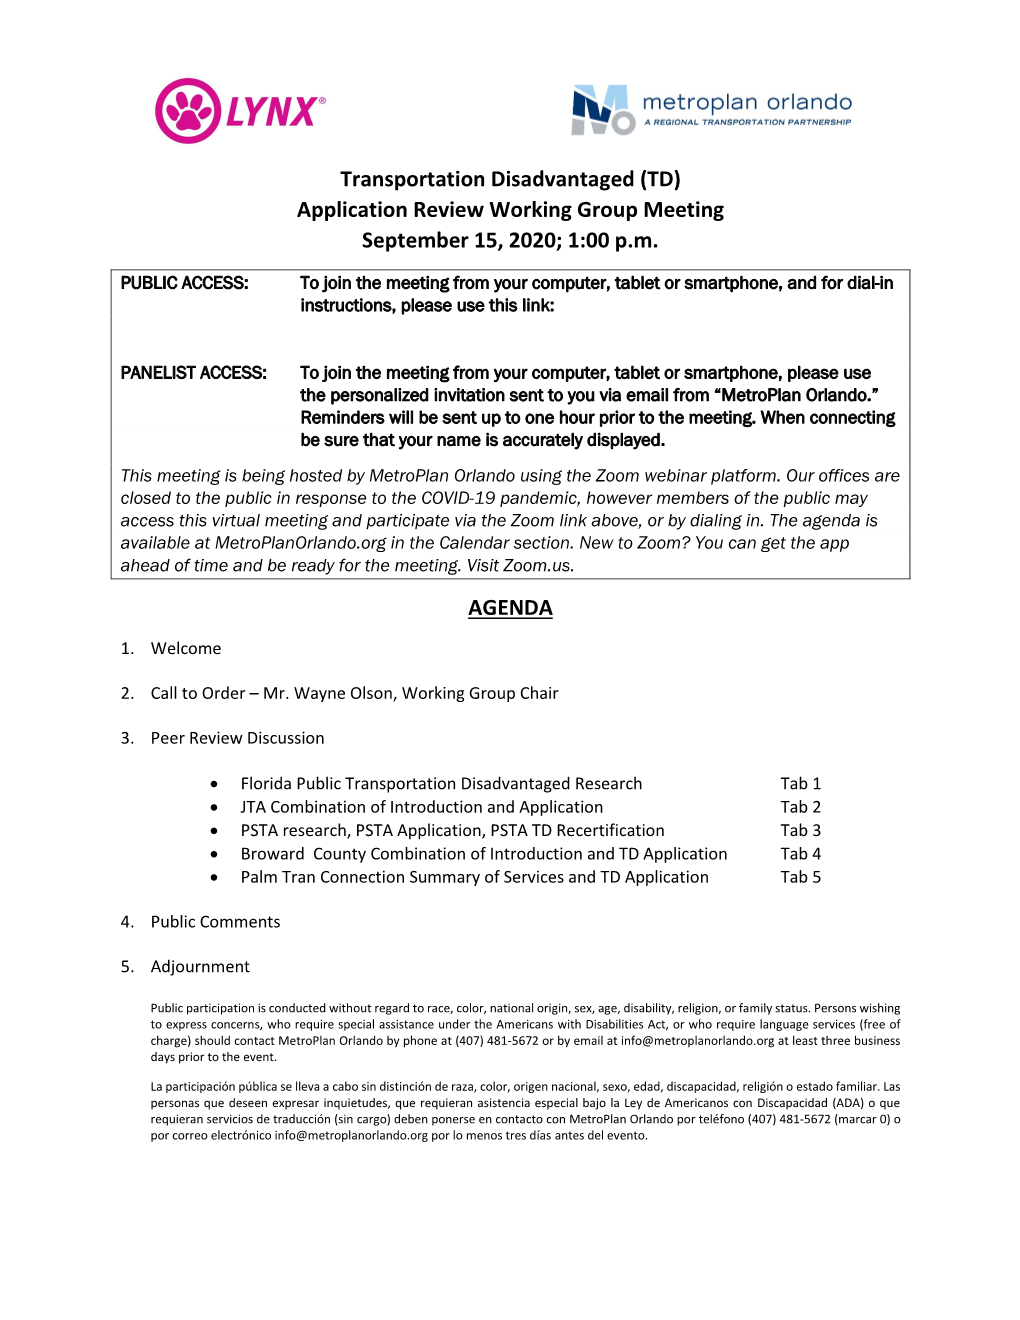 Transportation Disadvantaged (TD) Application Review Working Group Meeting September 15, 2020; 1:00 P.M